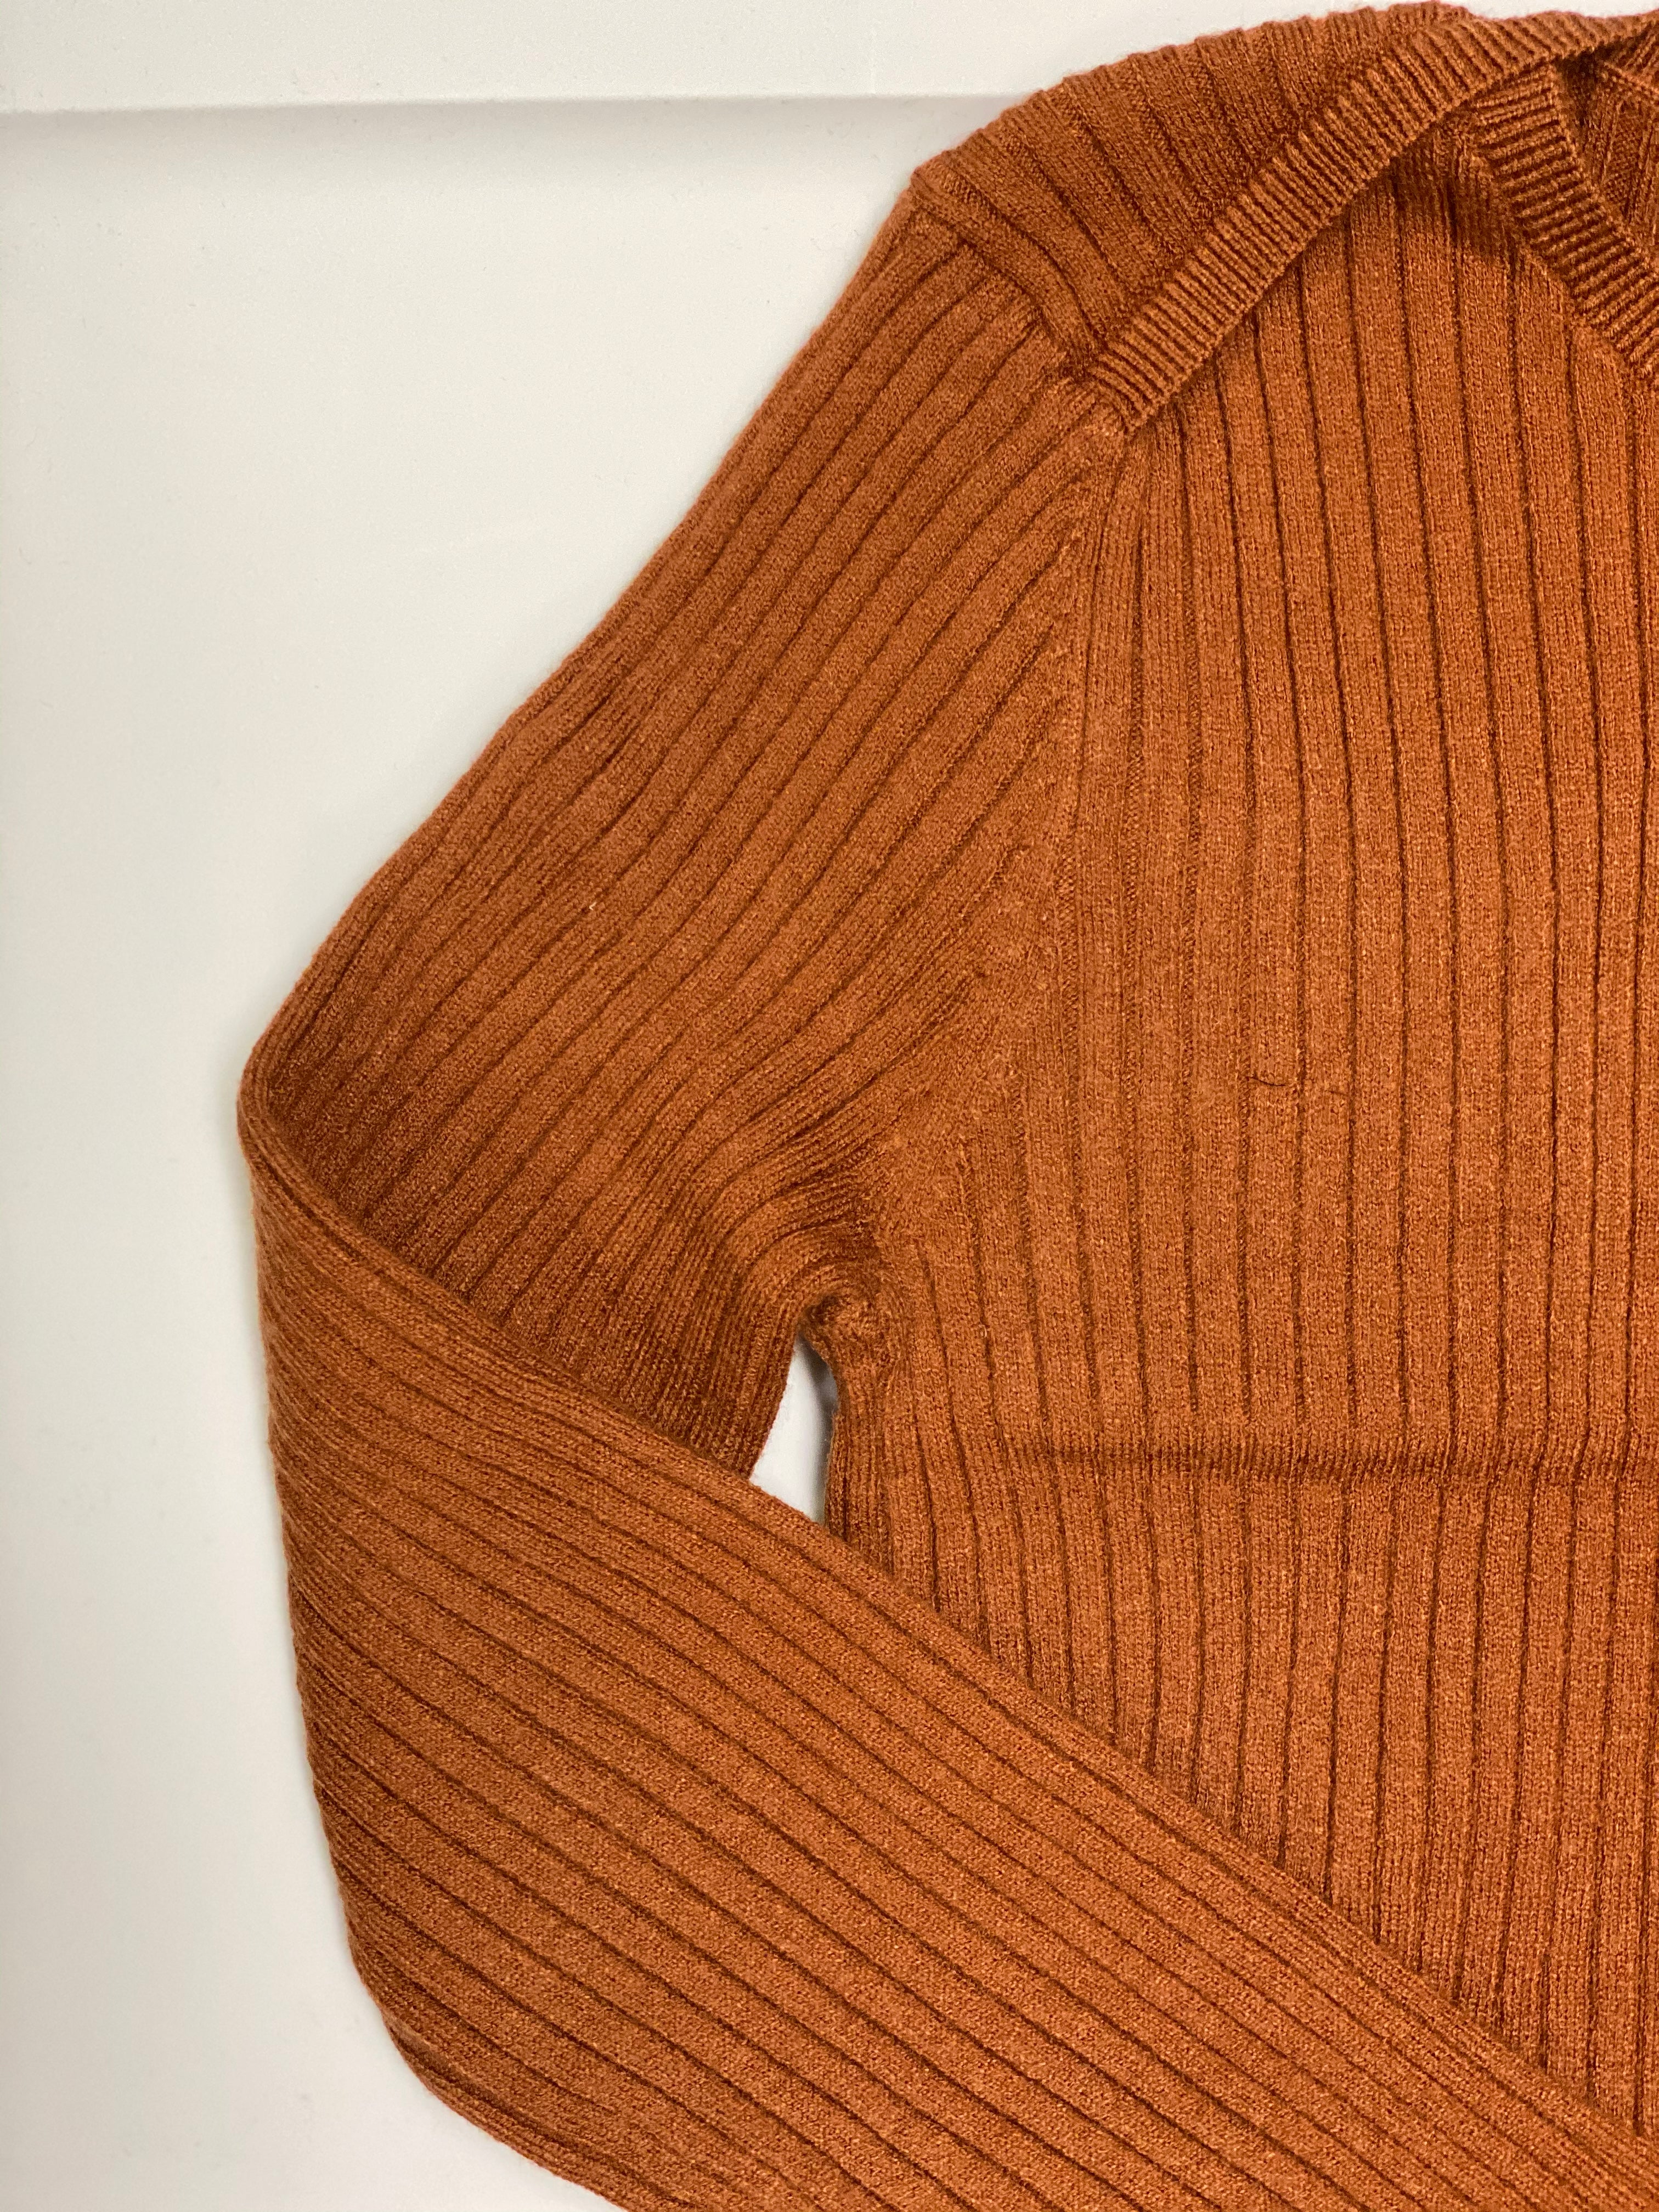 Basic Rib Sweater